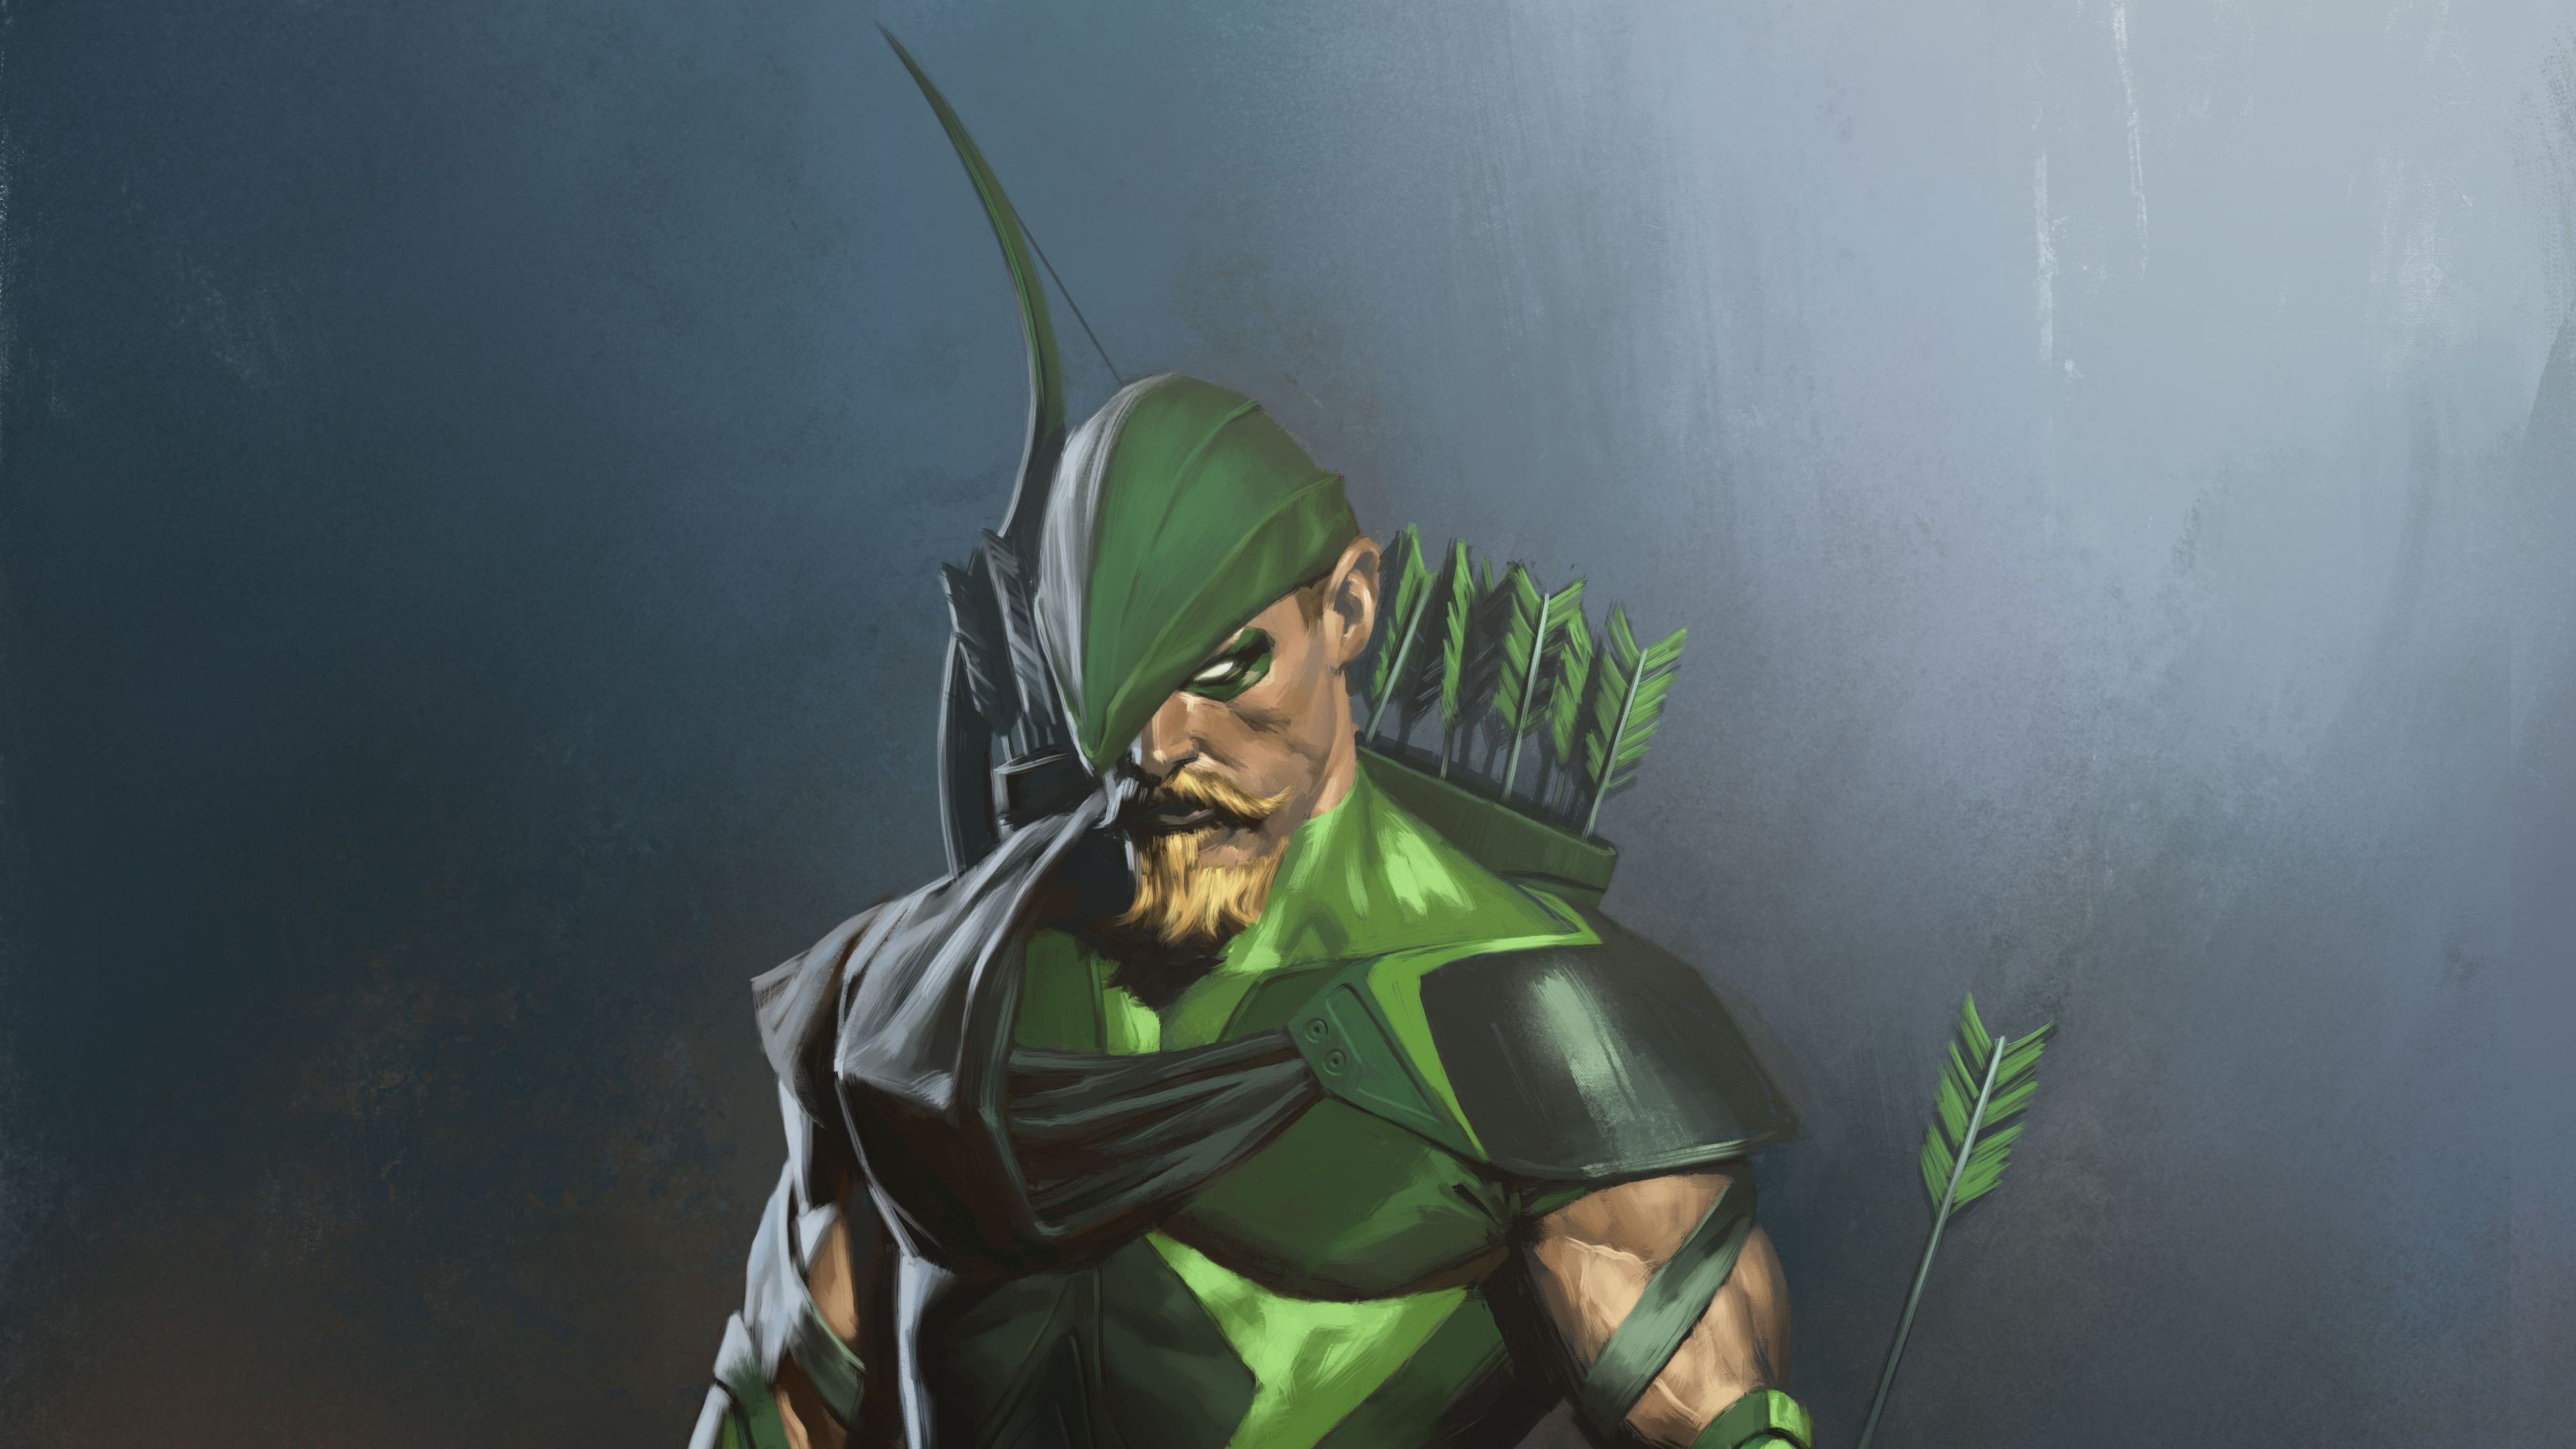 Green Arrow Injustice 2 Art 4k Superheroes Wallpaper, Injustice 2 Wallpaper, Hd Wallpaper, Games Wallpaper, Digital Ar. Green Arrow, Hero Wallpaper, Superhero